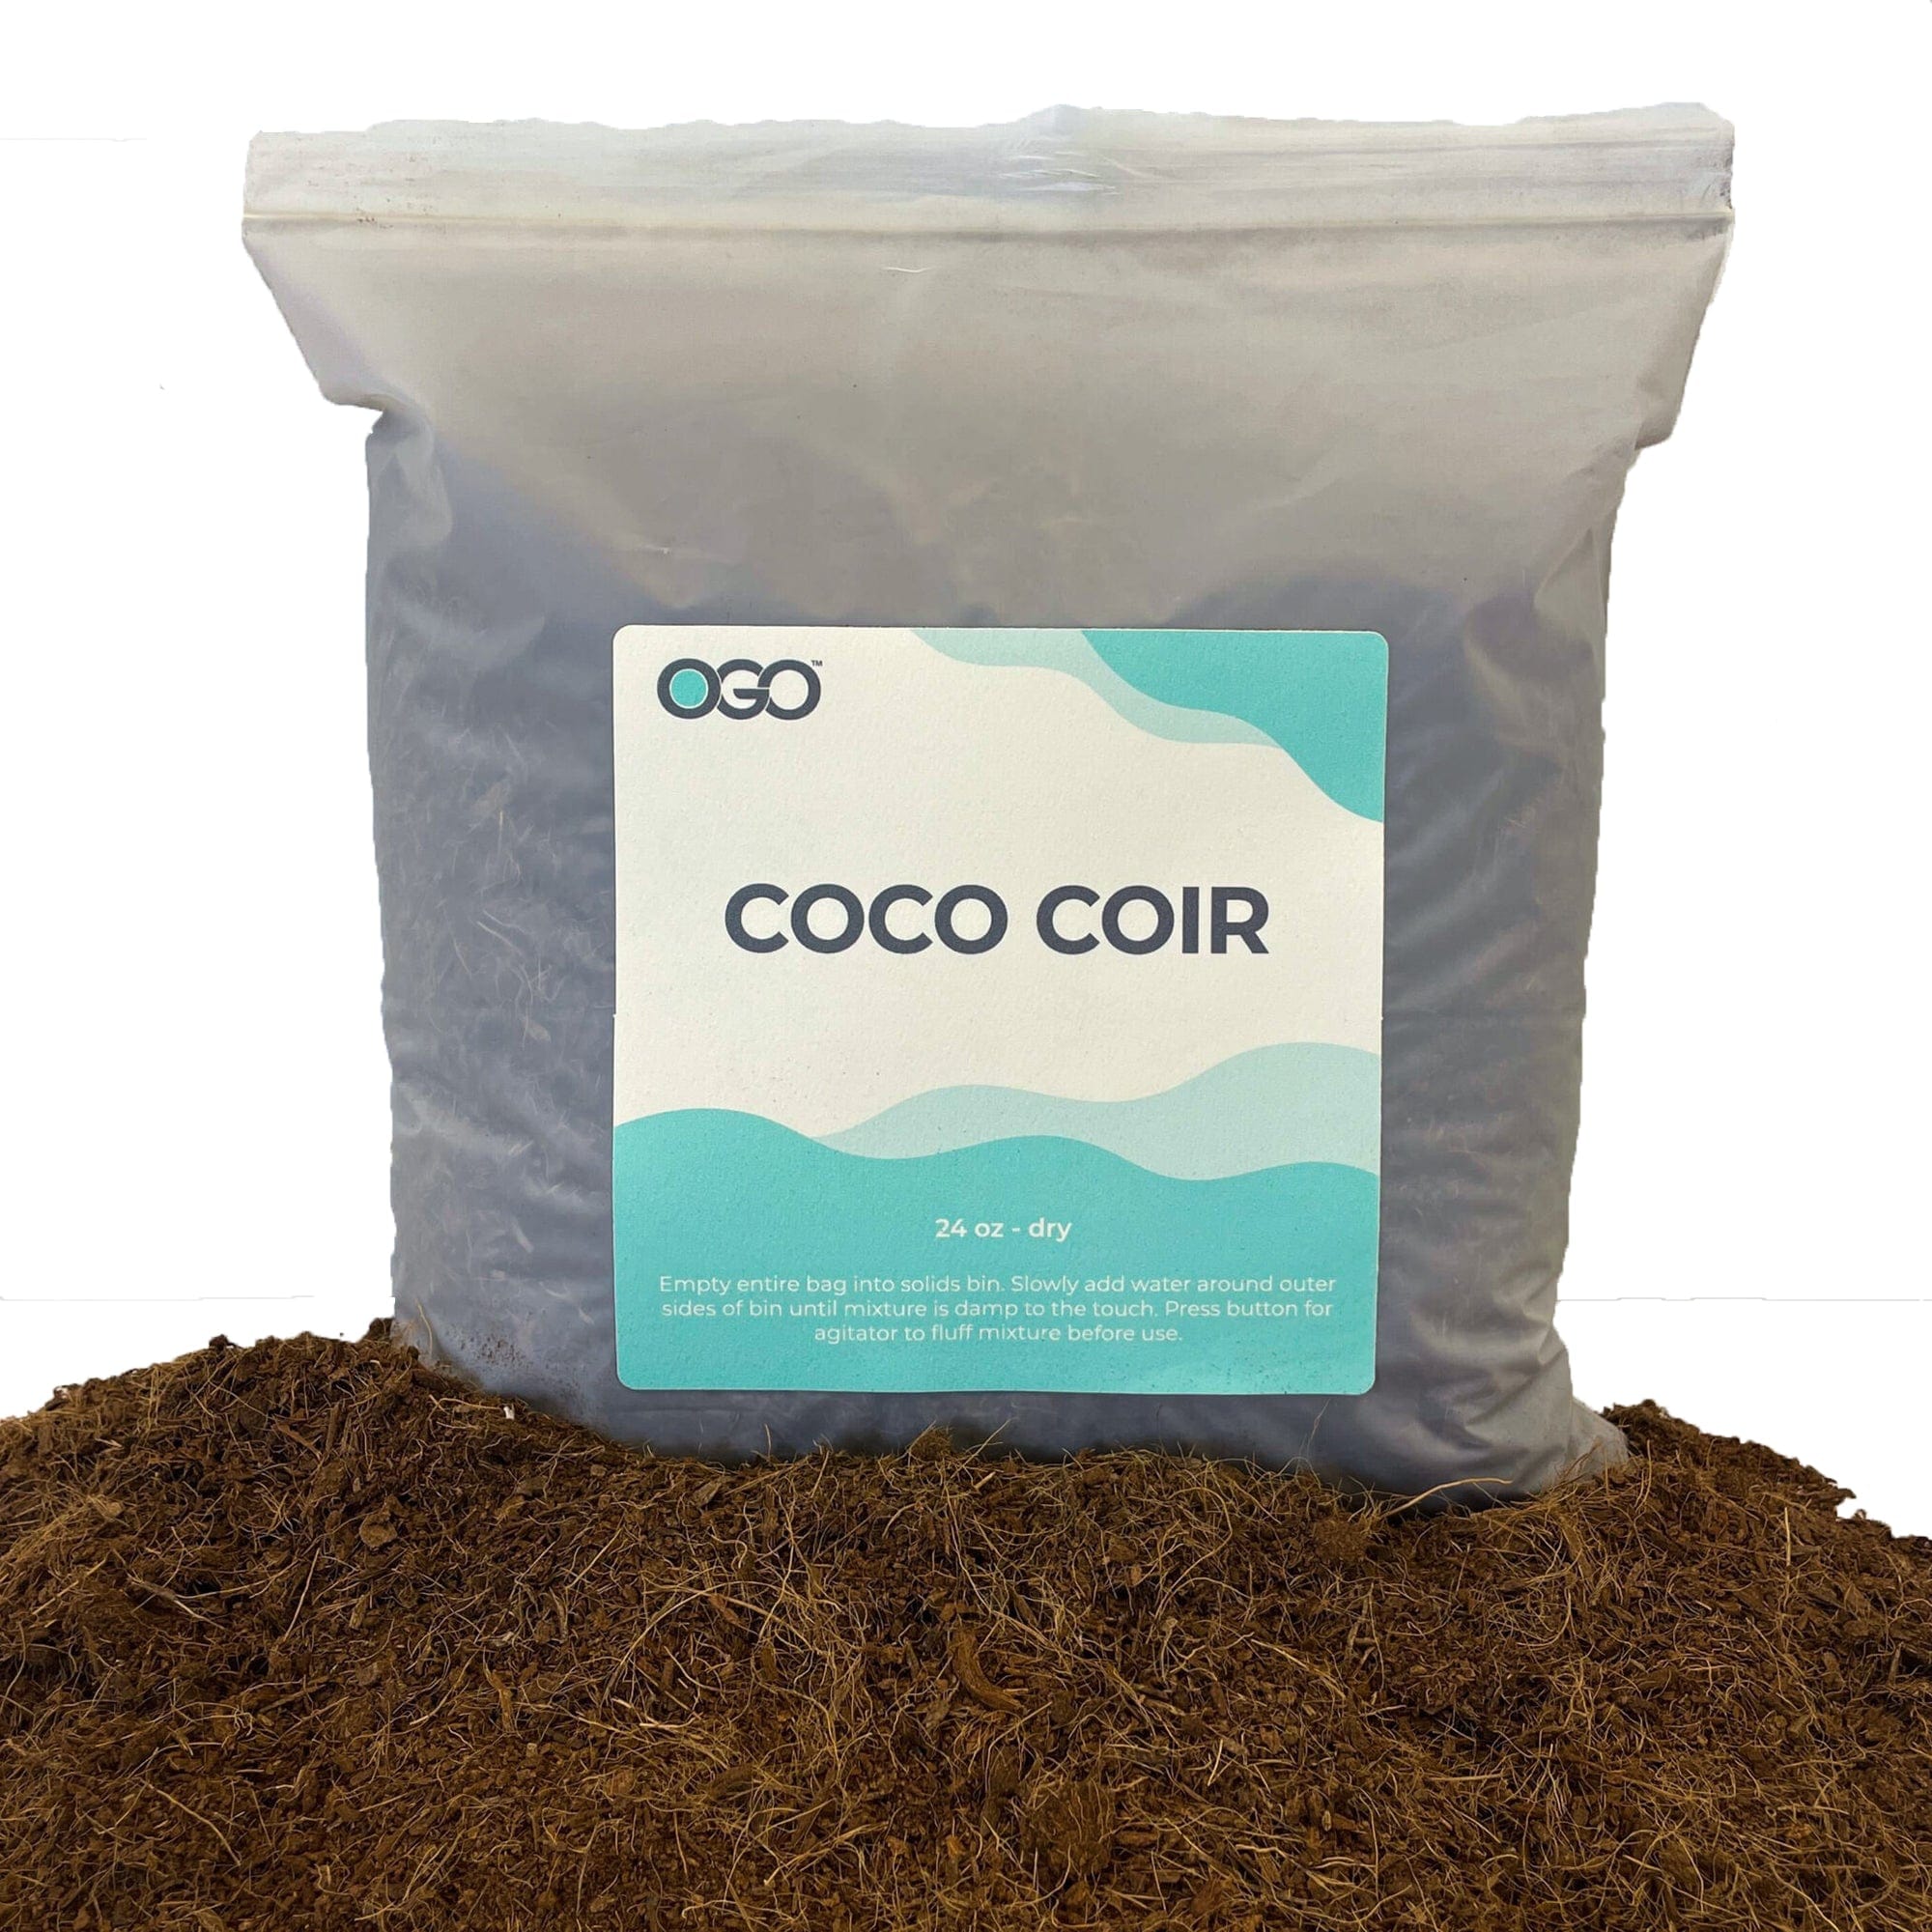 OGO Co-Co-2208 Dry Coco Coir for Composting Toilet - 24 Oz. Bag